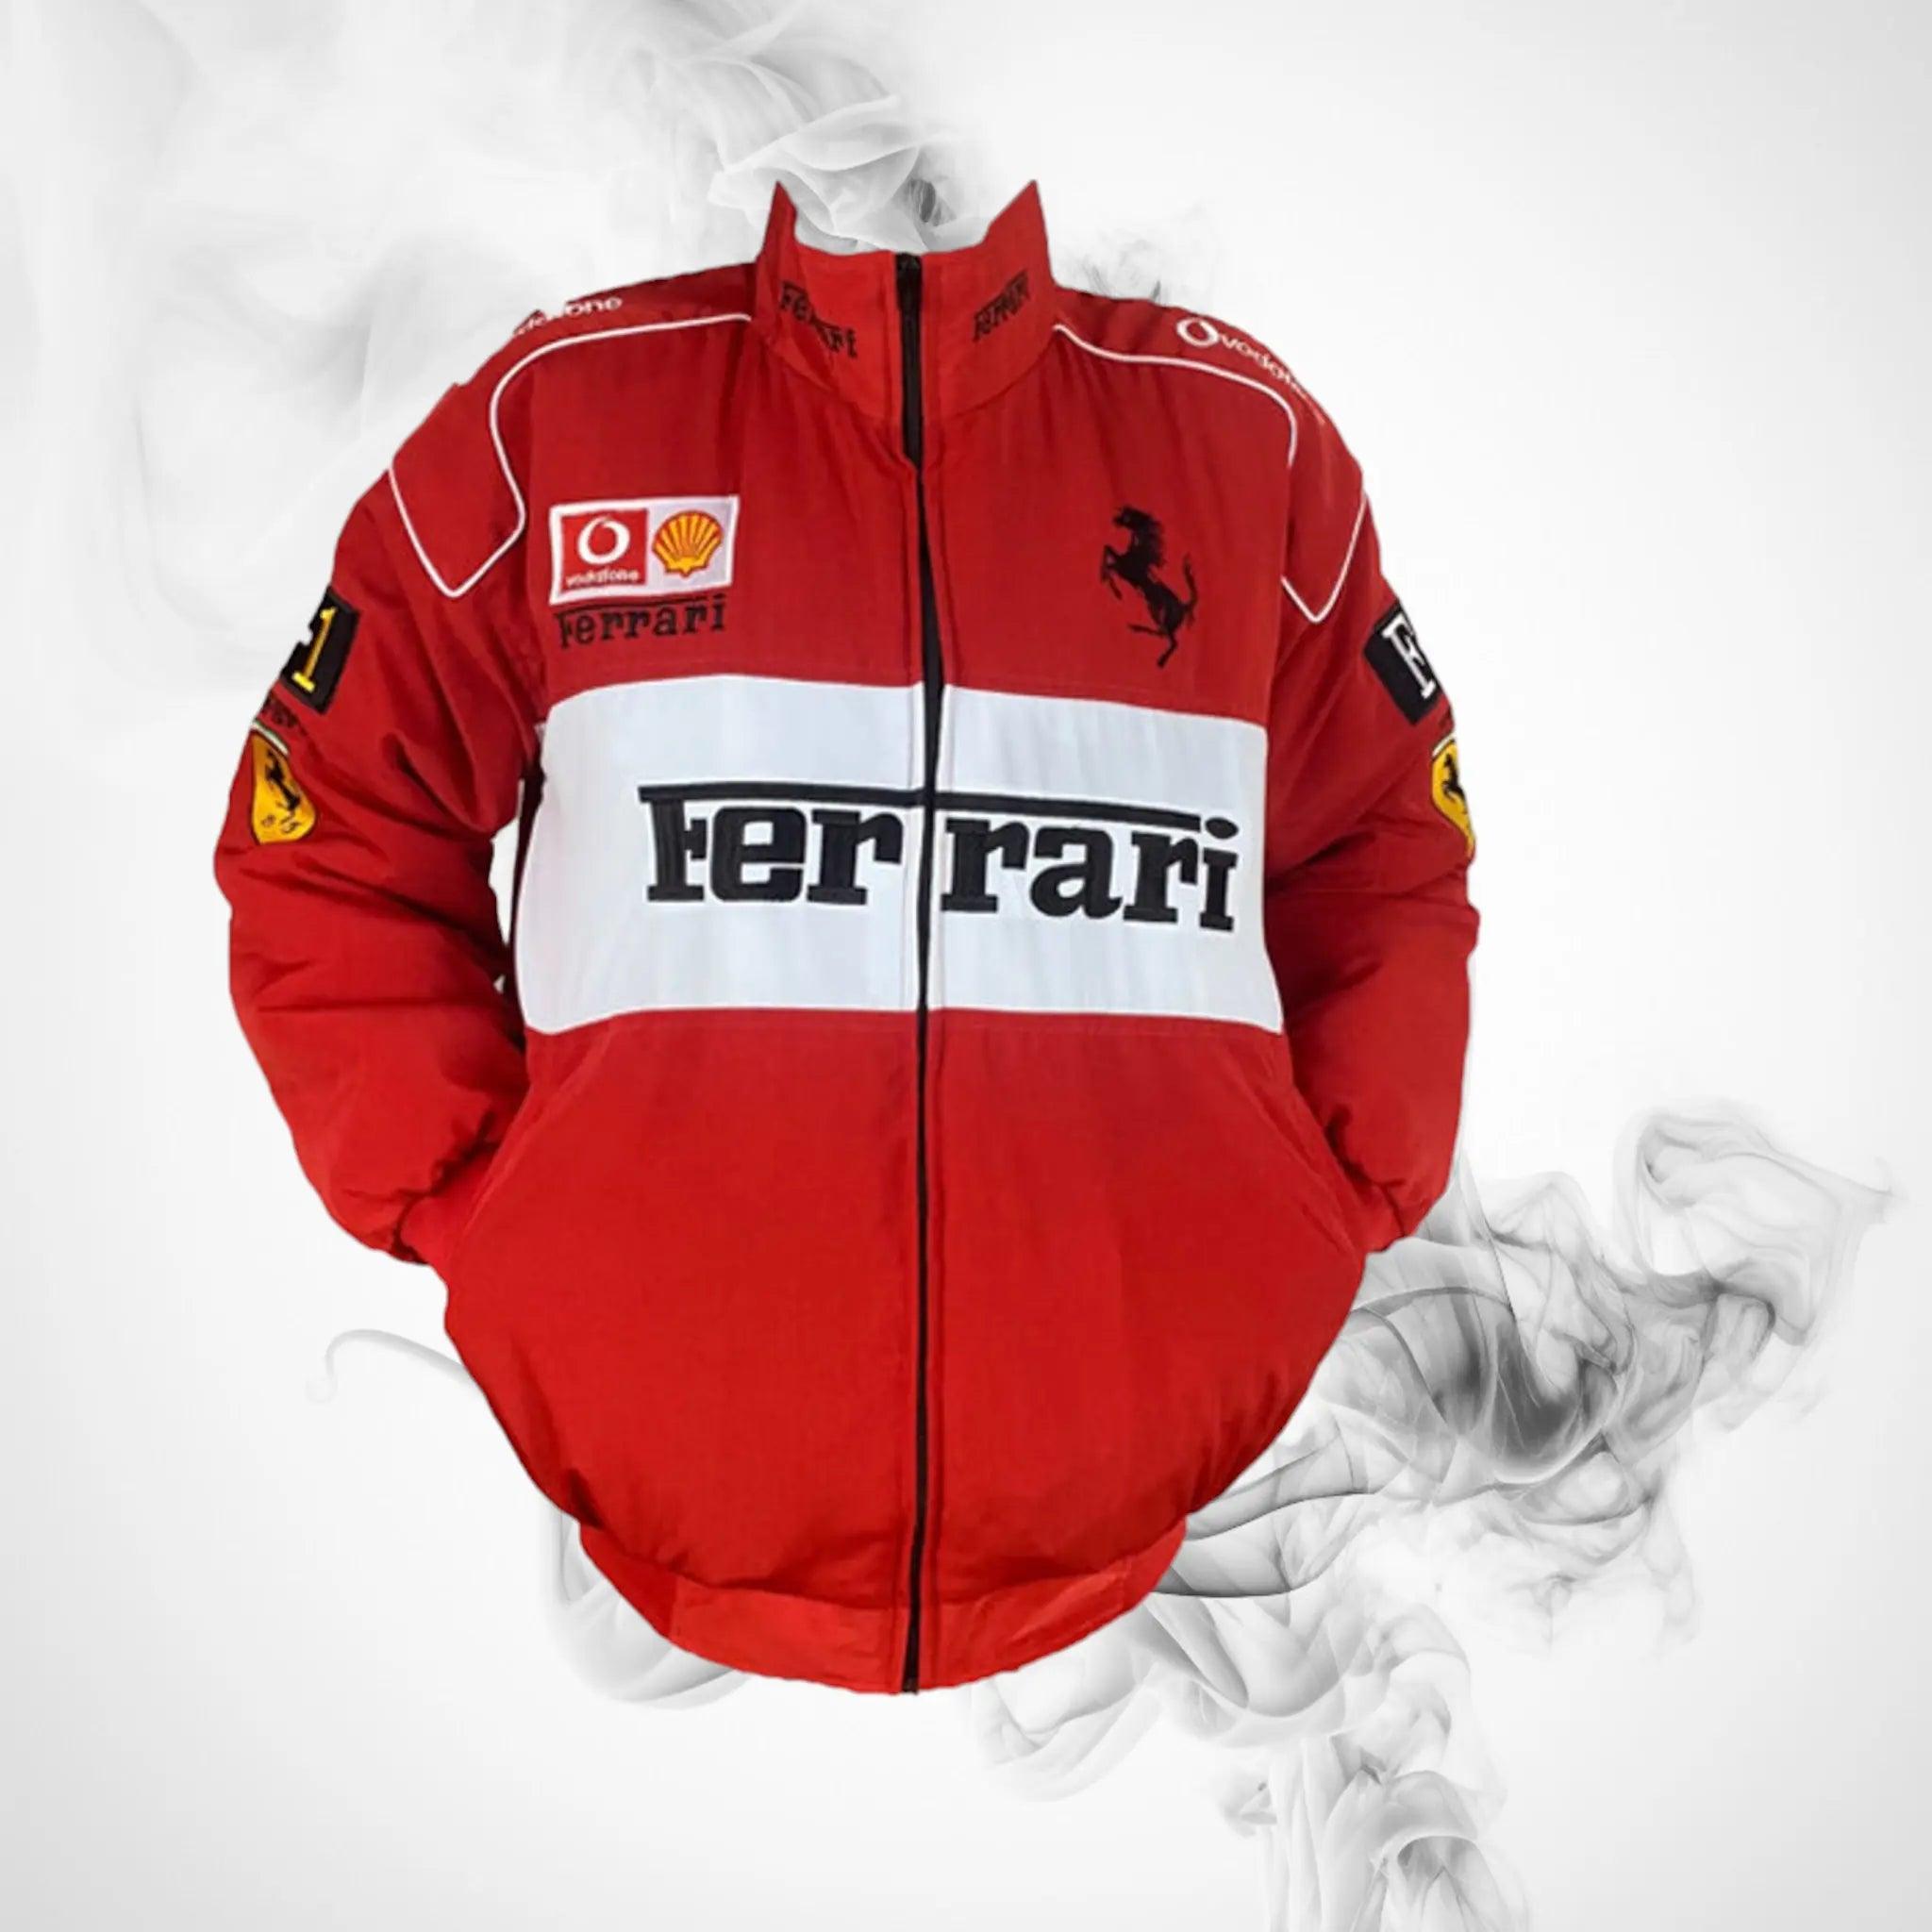 Ferrari Racing Jacket Red and White | NASCAR jacket - Dash Racegear 